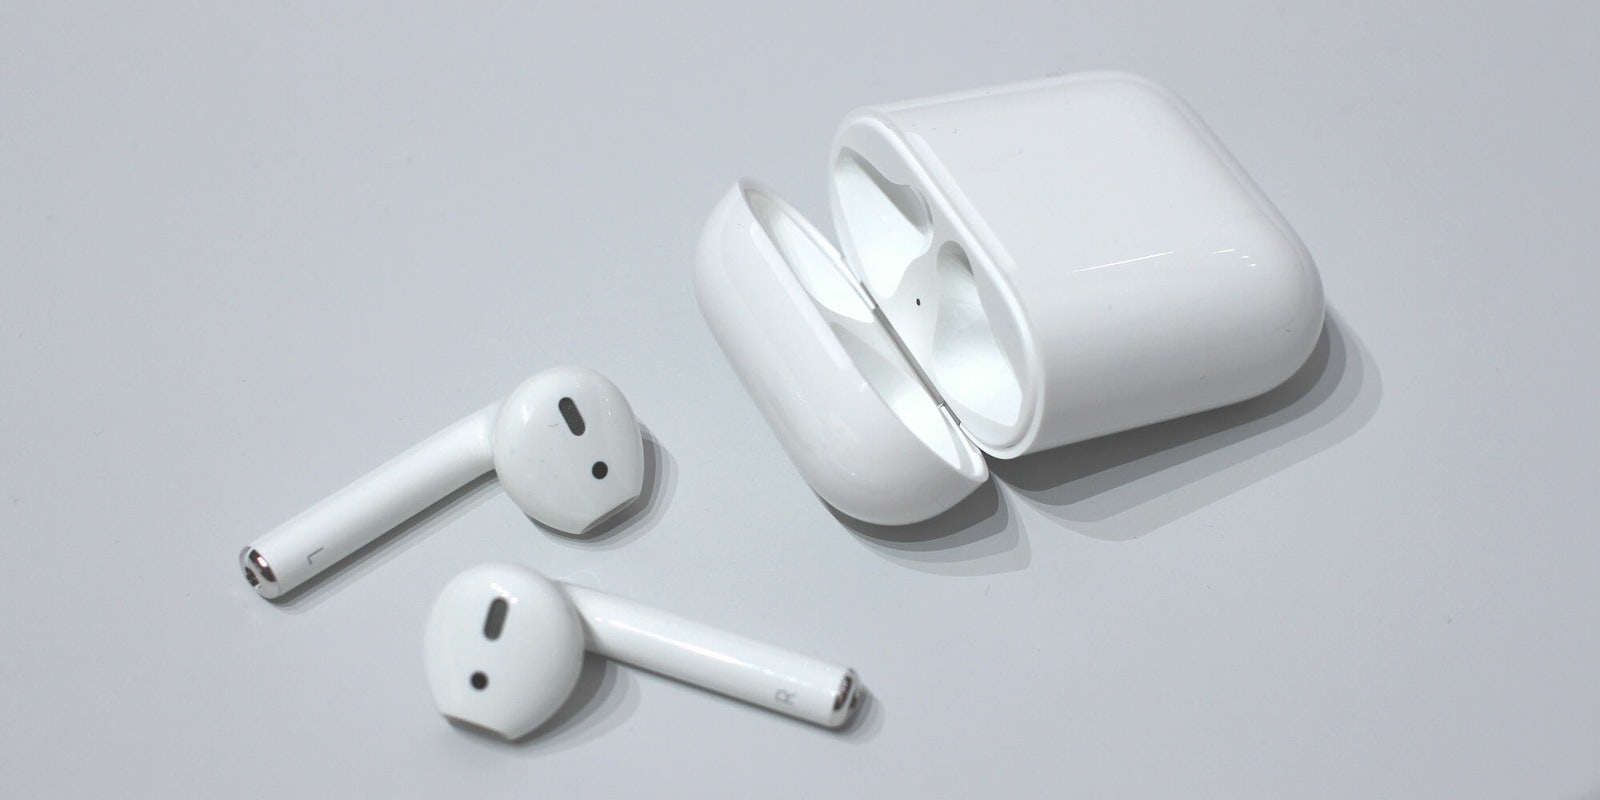 apple airpods truly wireless headphones